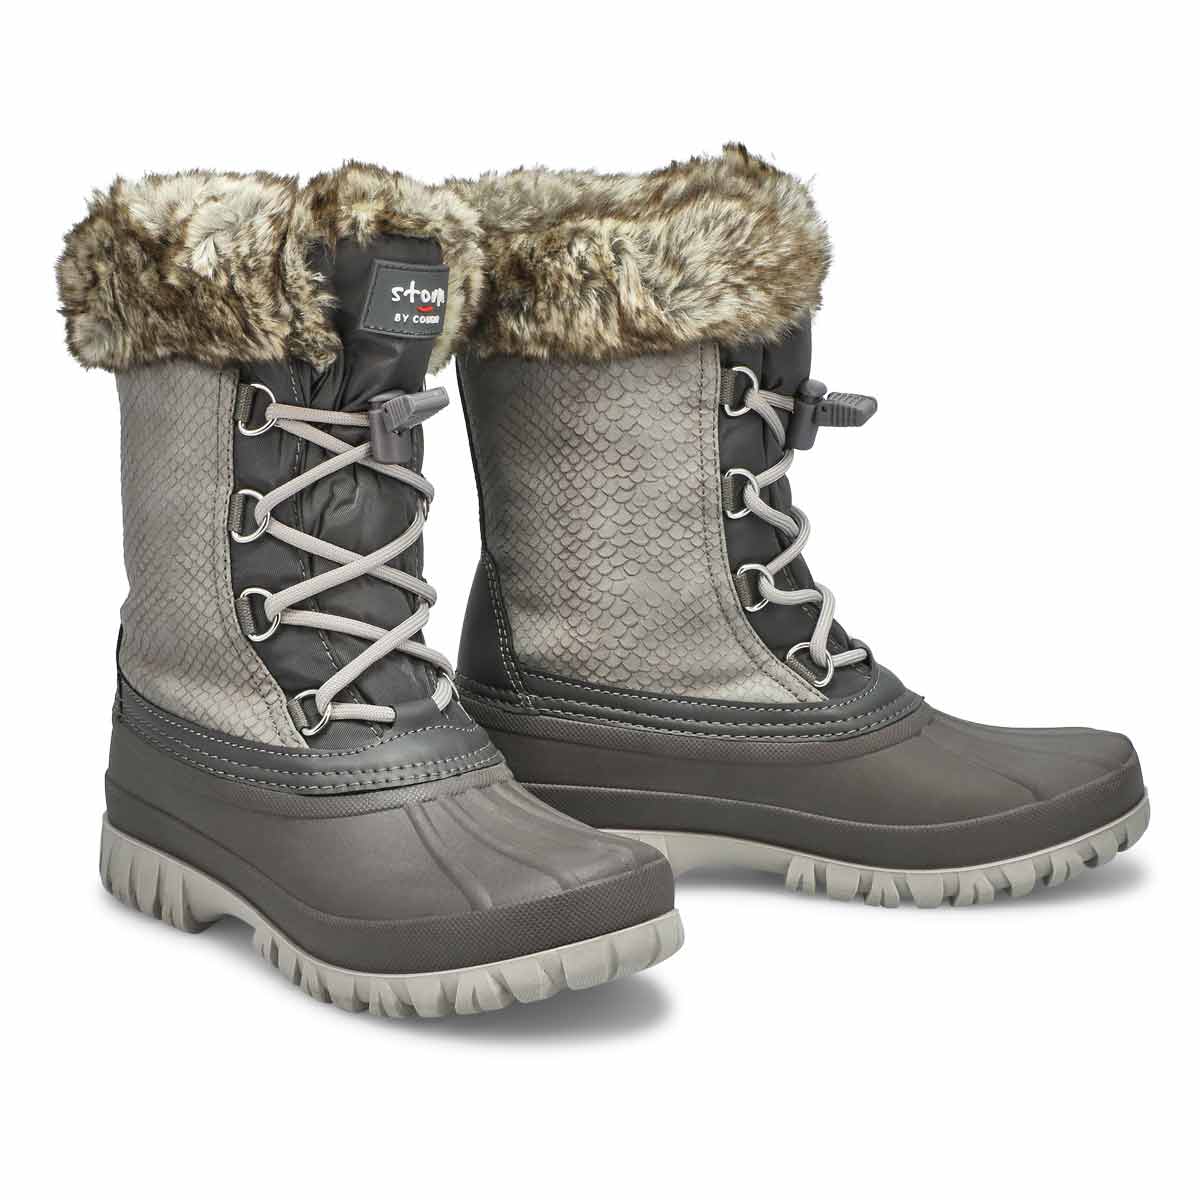 Women's Carson Waterproof Winter Boot - Charcoal